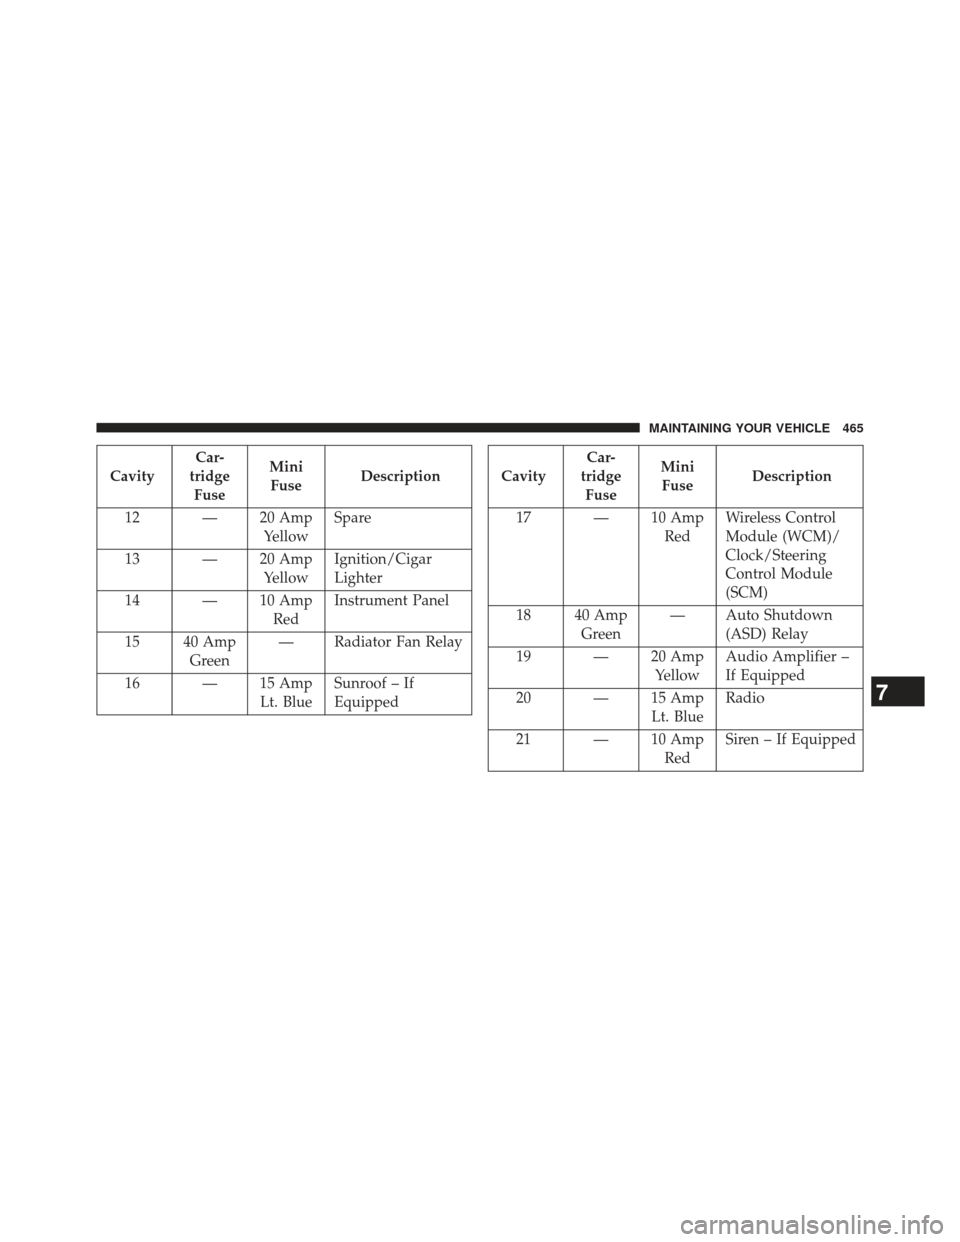 DODGE AVENGER 2014 2.G Owners Manual CavityCar-
tridge Fuse Mini
Fuse Description
12 — 20 Amp YellowSpare
13 — 20 Amp YellowIgnition/Cigar
Lighter
14 — 10 Amp RedInstrument Panel
15 40 Amp Green — Radiator Fan Relay
16 — 15 Amp